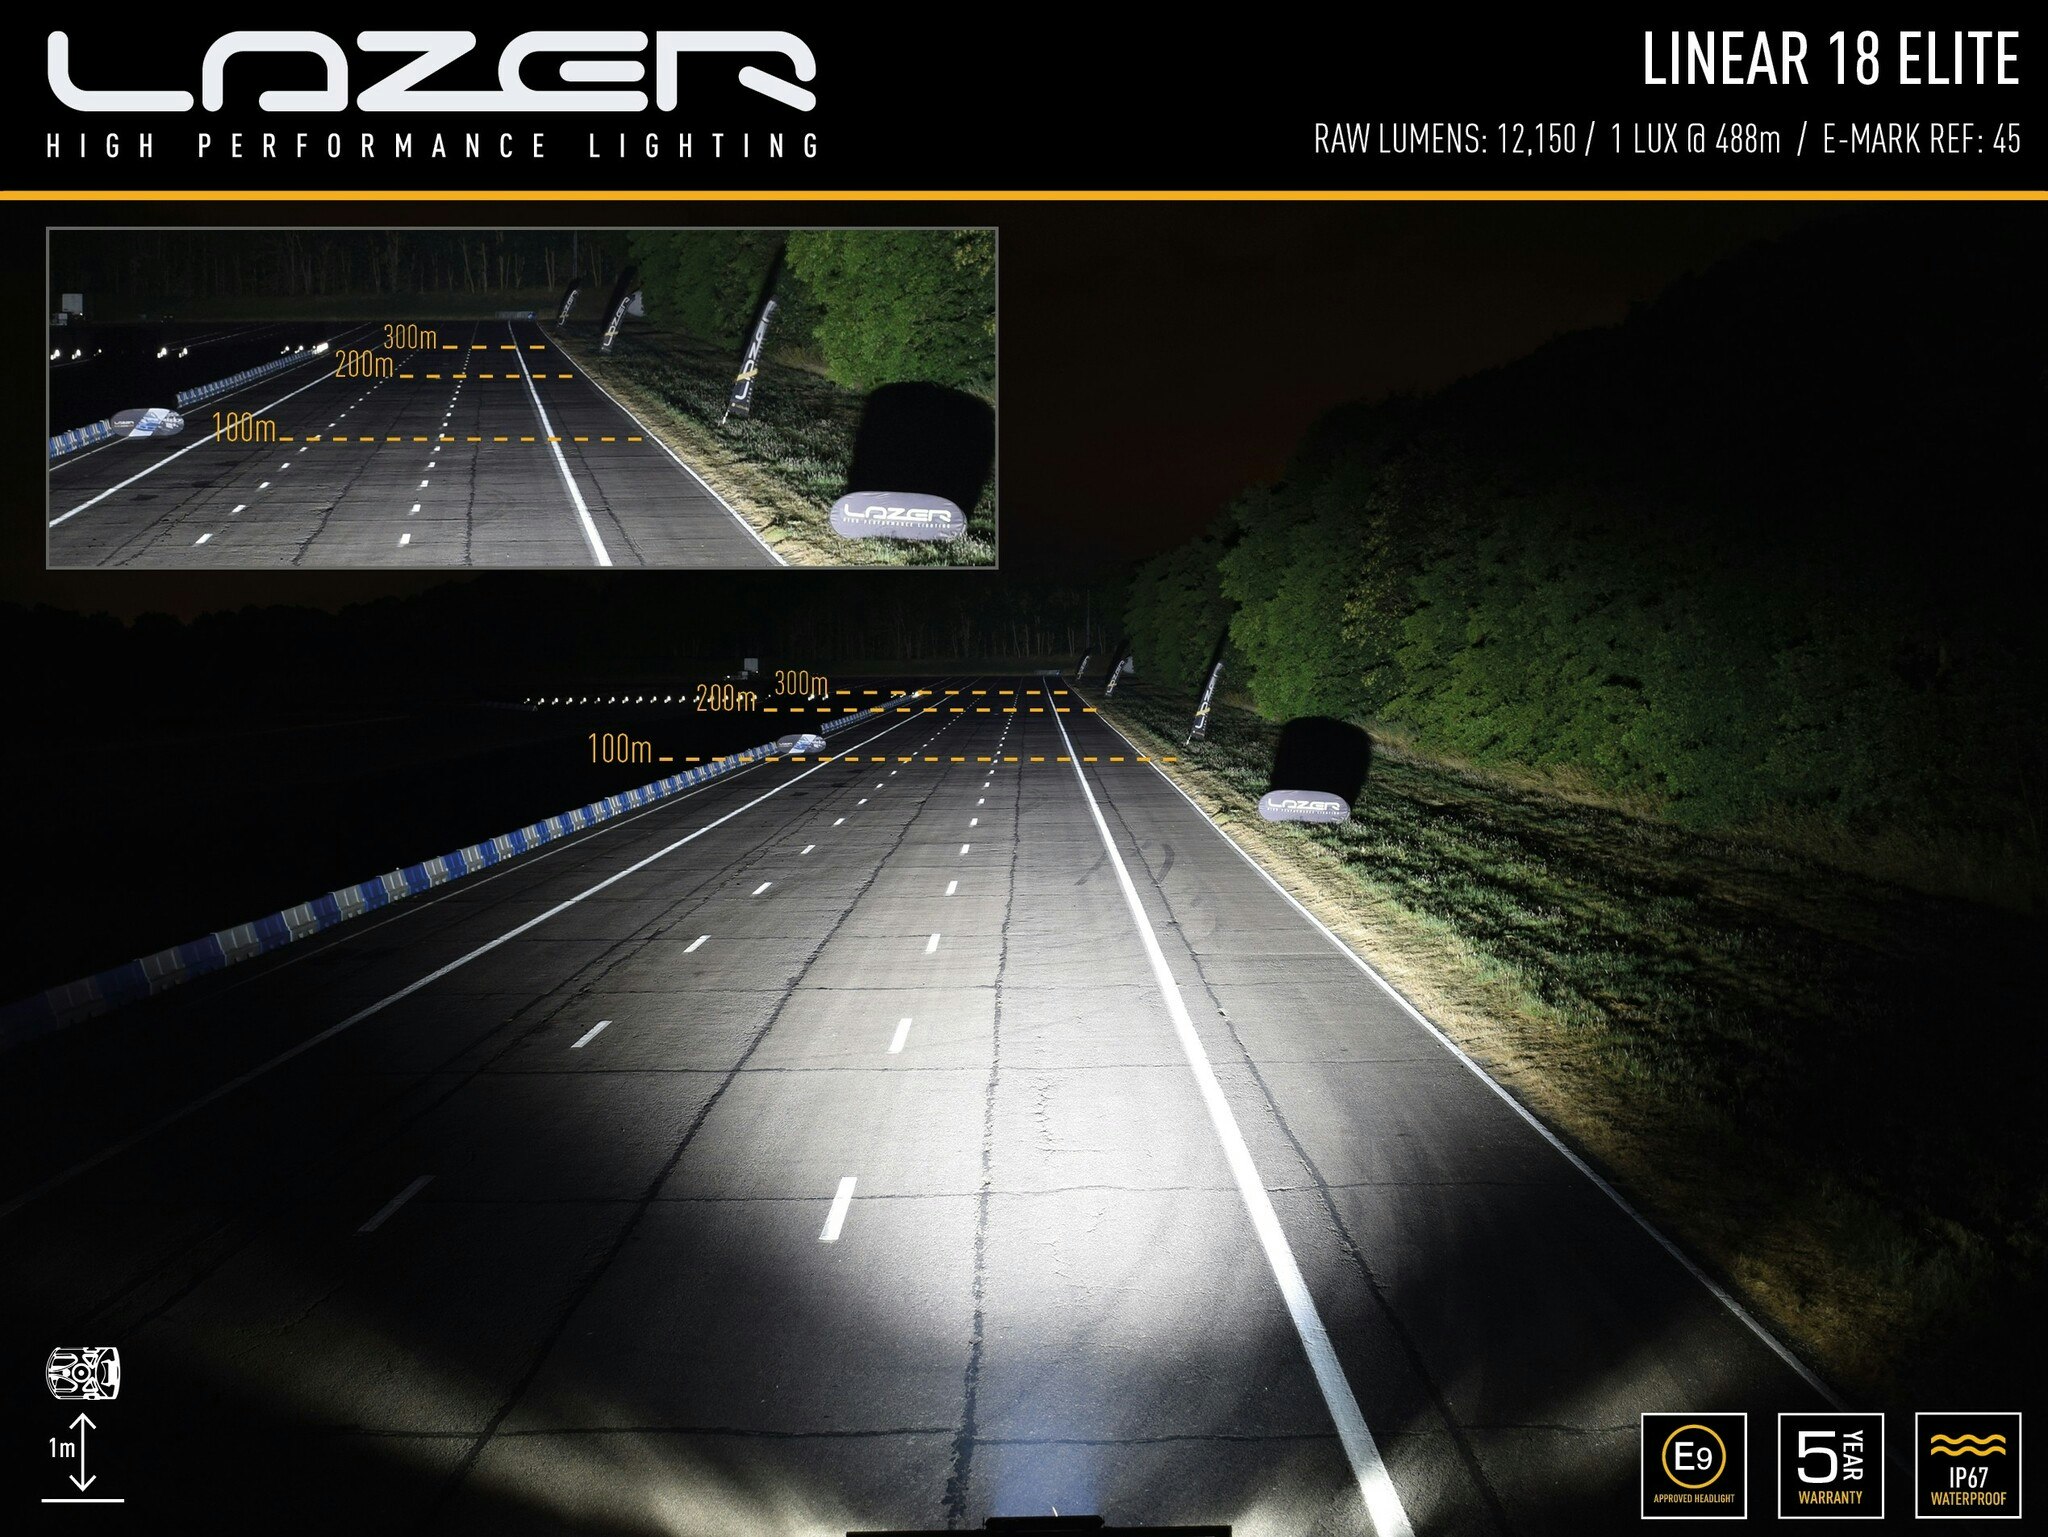 Lazer Grillkit Linear 18 Elite Transit Courier 2014-